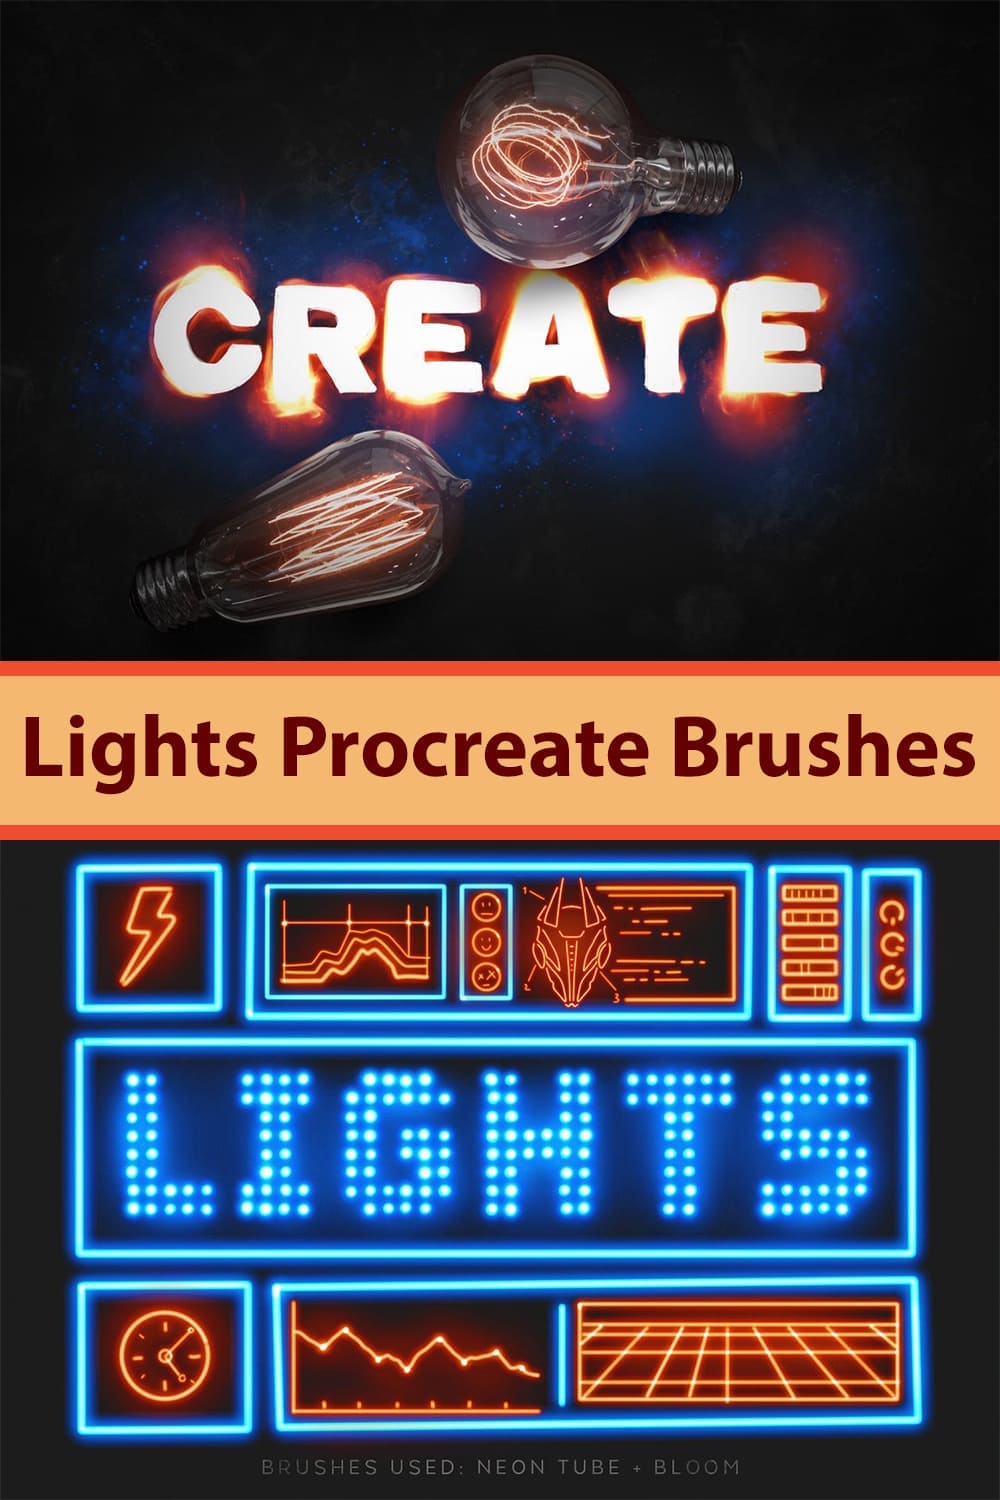 Procreate Brushes - Create Lights!